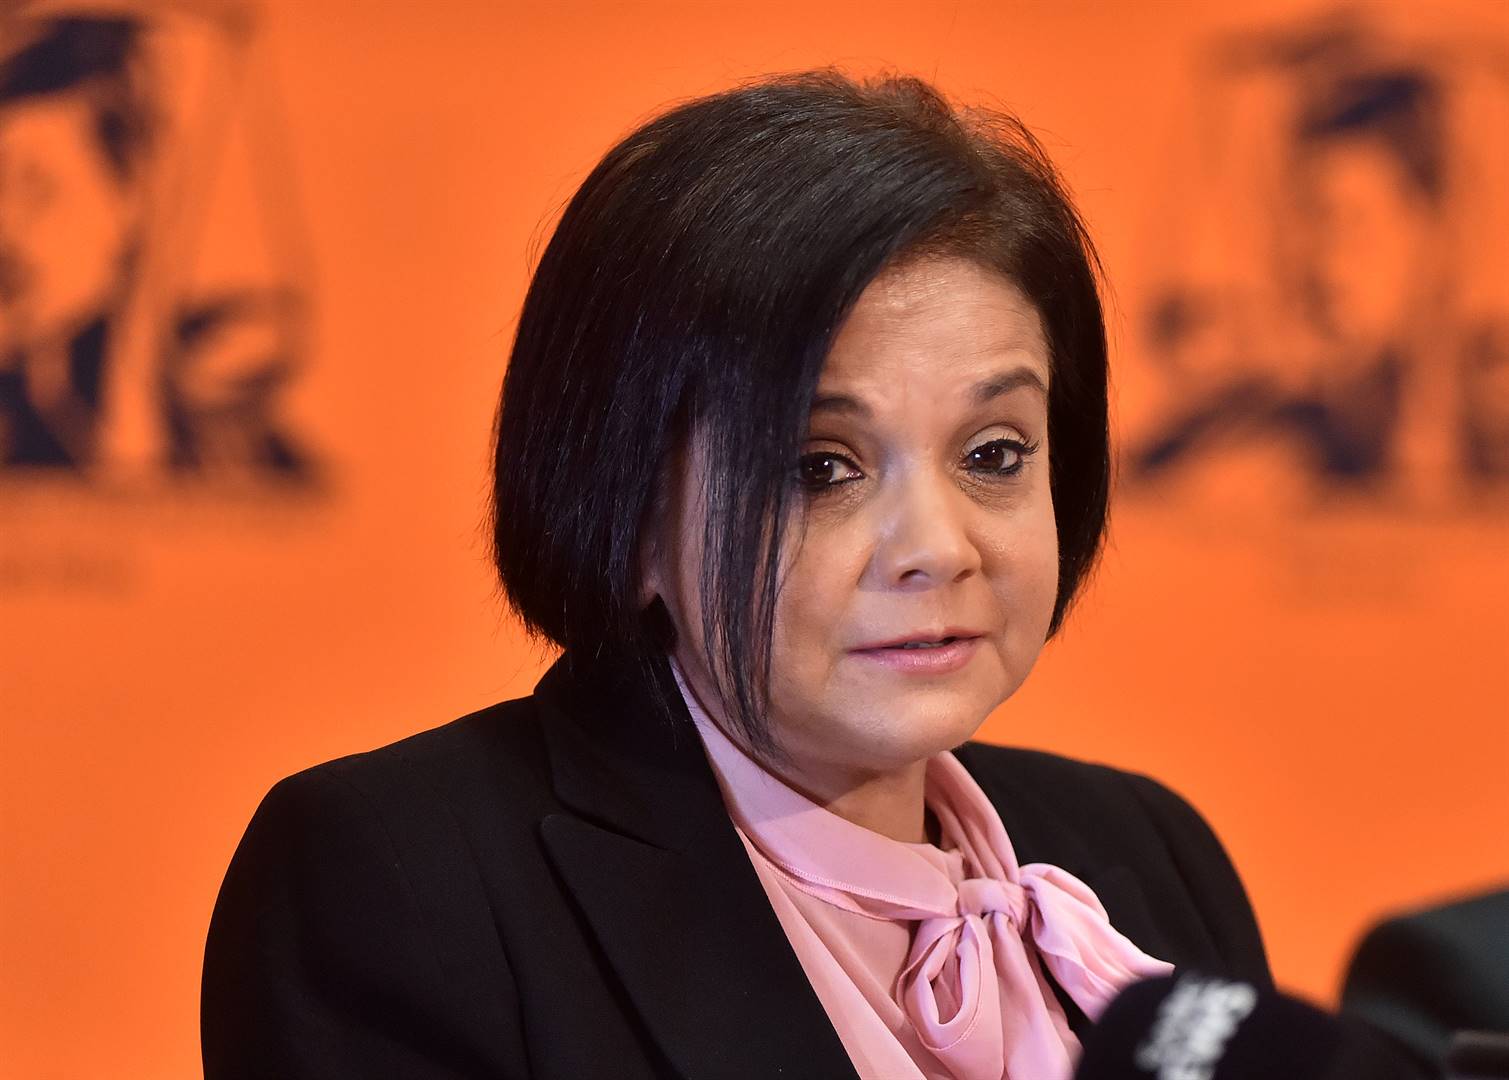 NPA boss Advocate Shamila Batohi says she the prosecutors are doing their best